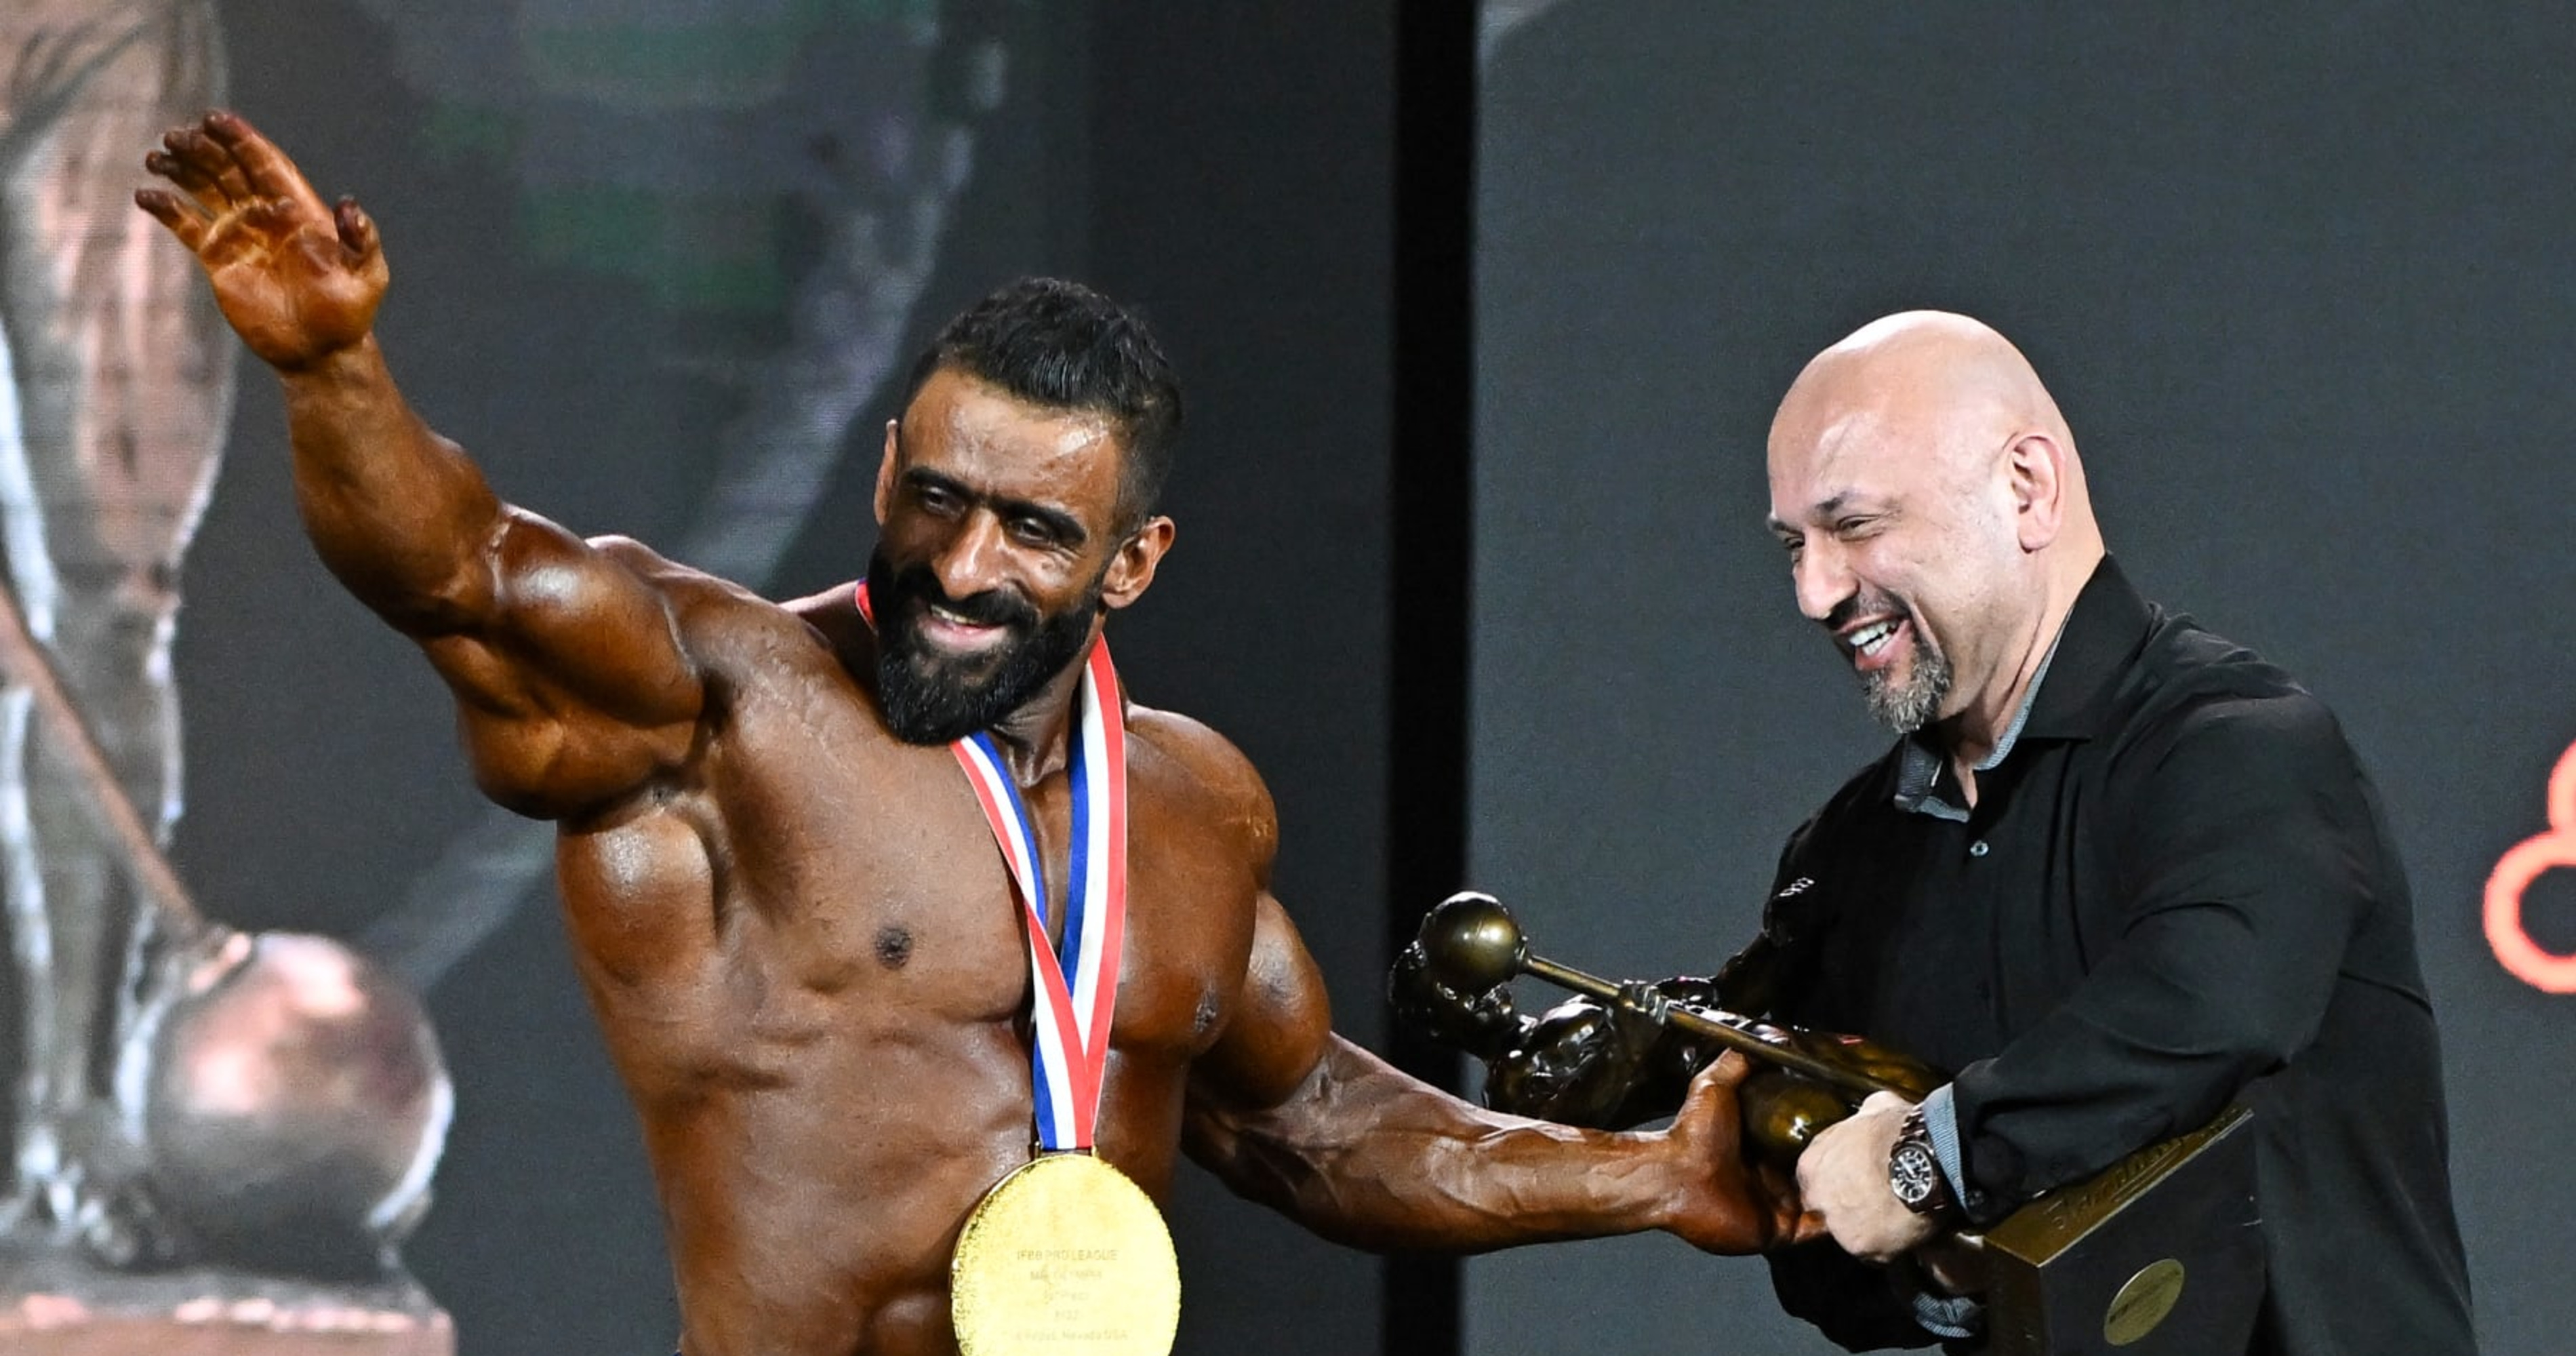 Mr. Olympia 2023: Dates, Schedule, Prize Money, Top Bodybuilders